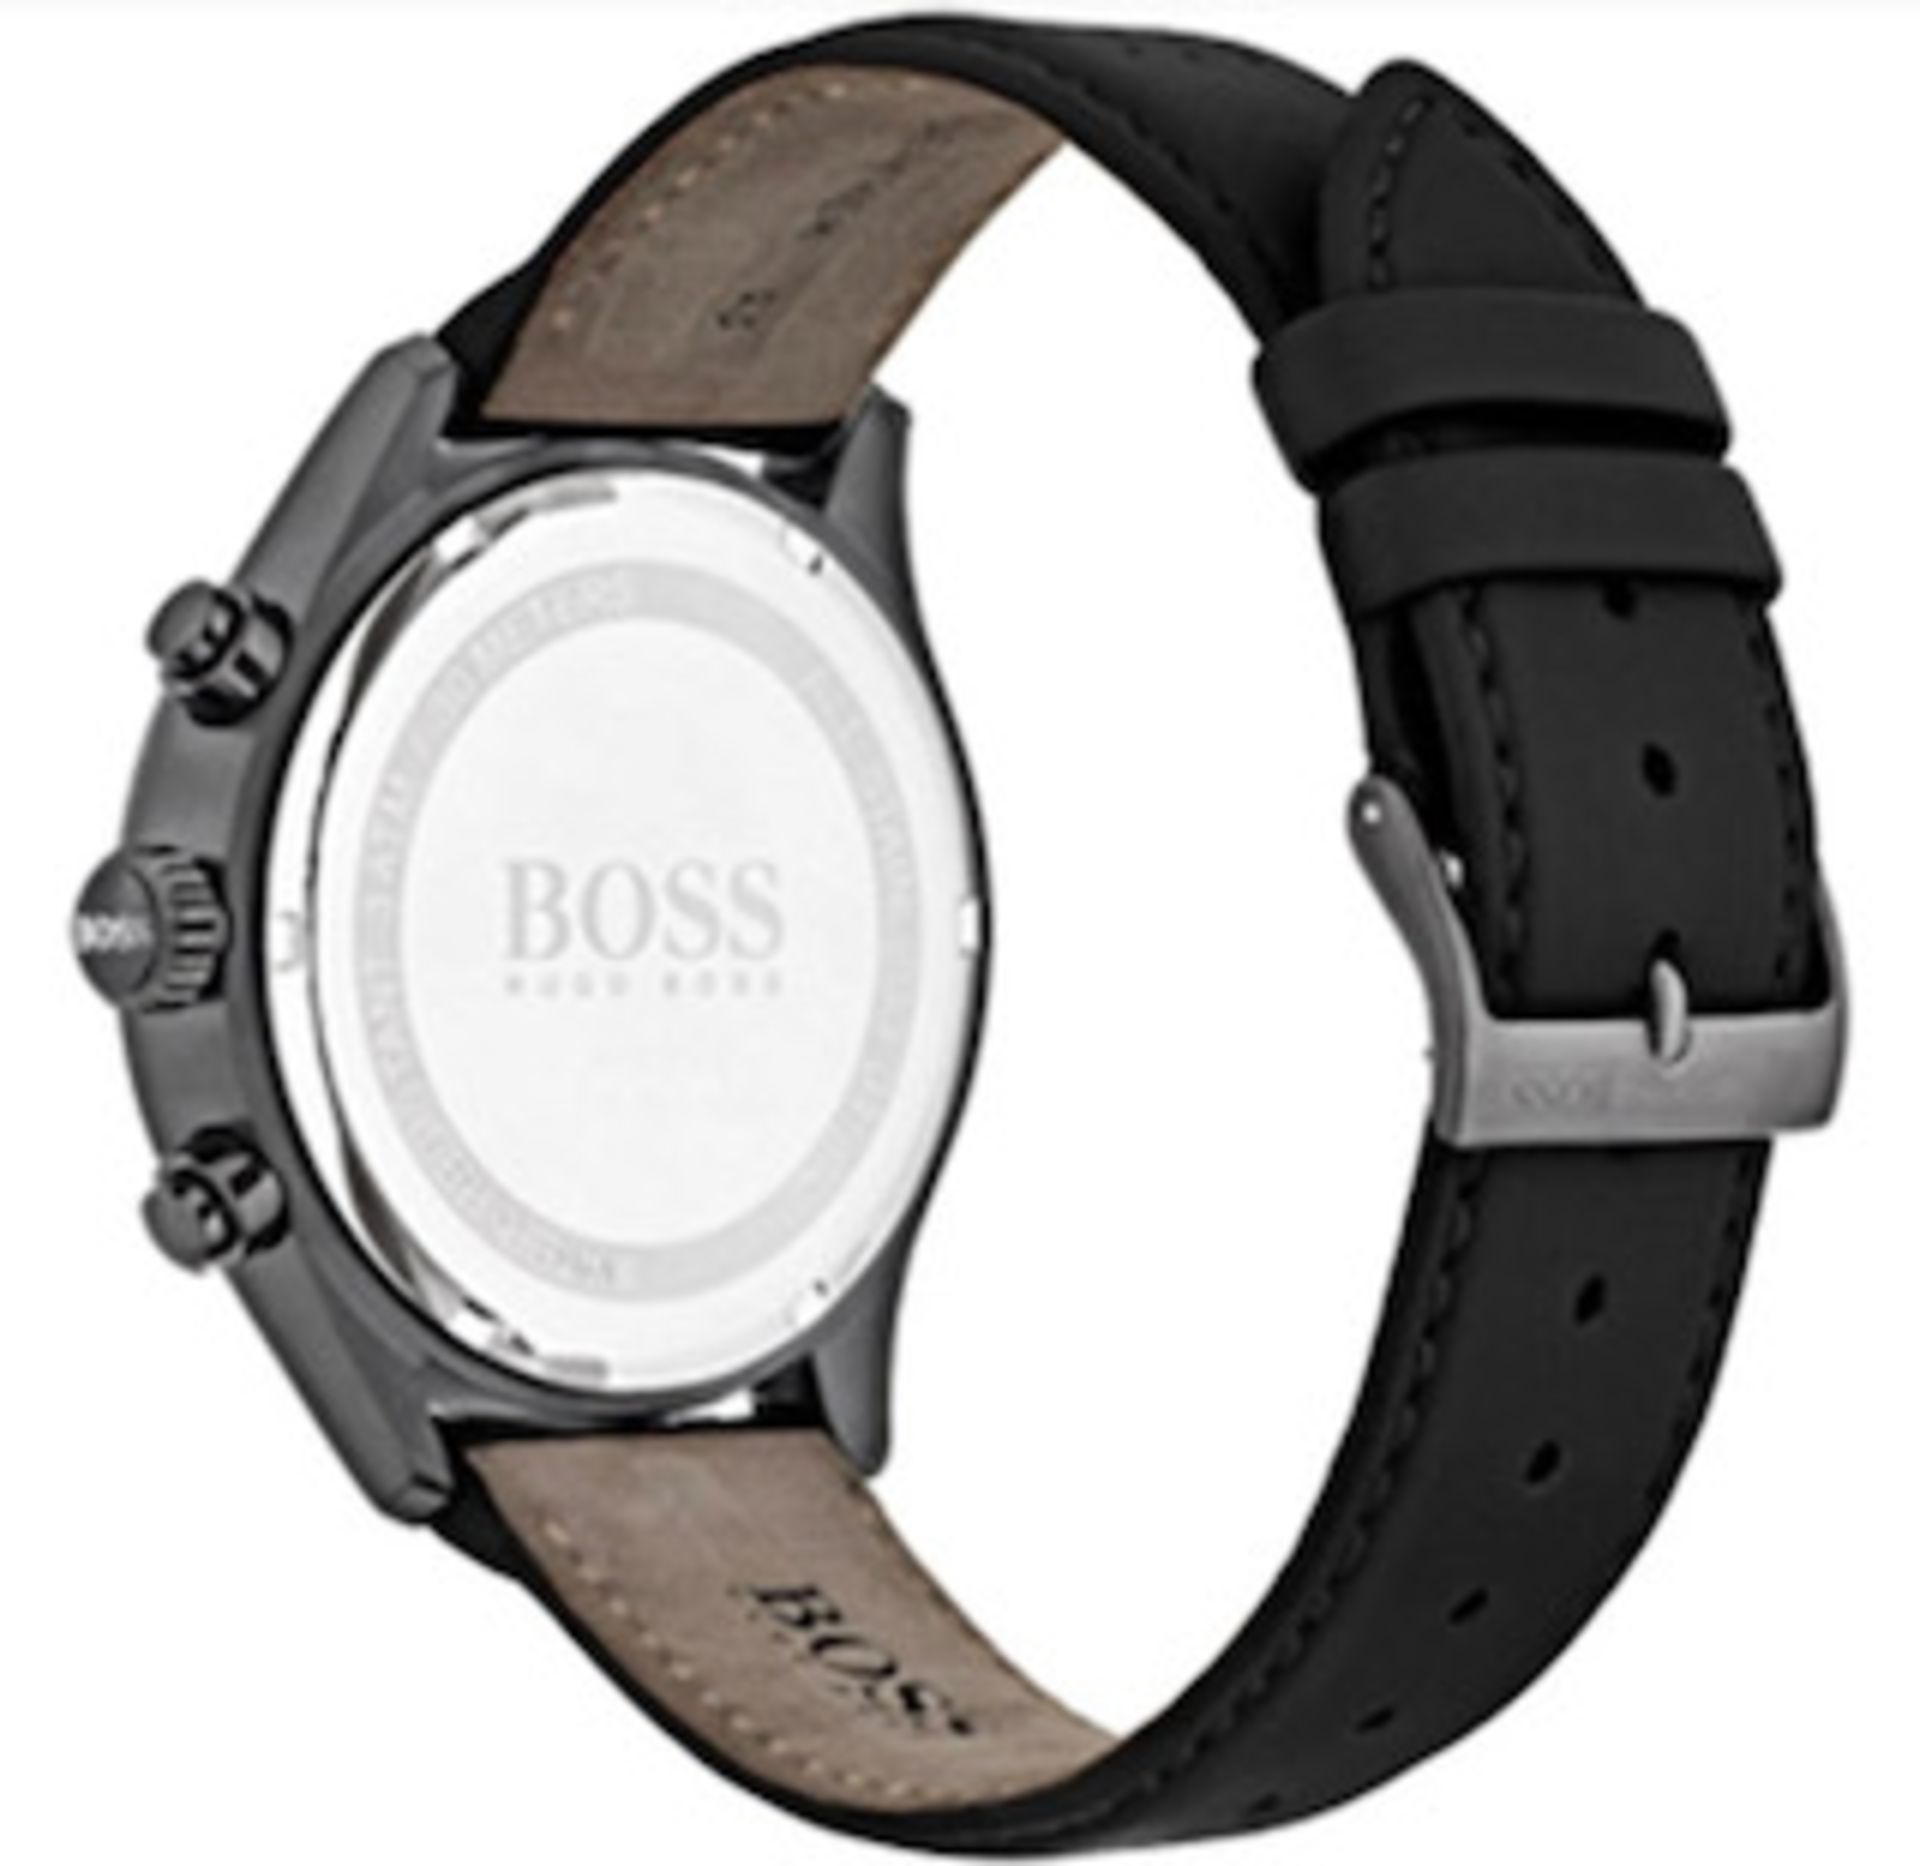 Hugo Boss 1513474 Men's Grand Prix Black Dial Black Leather Strap Chronograph Watch - Image 5 of 5